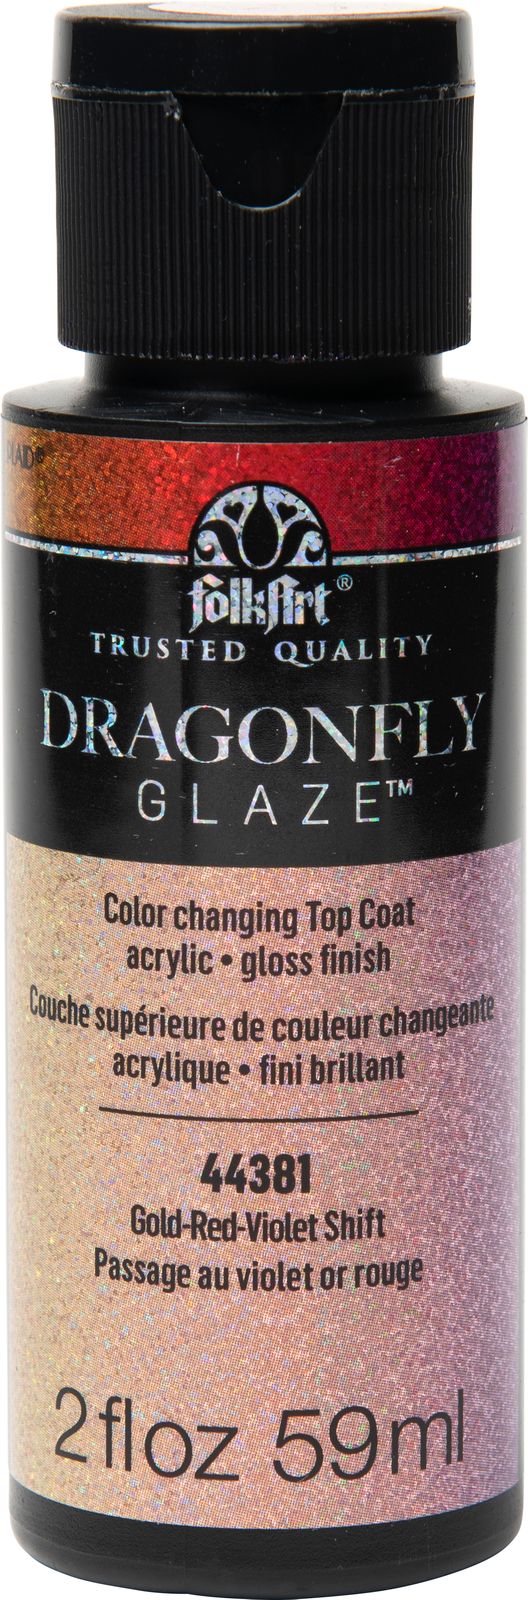 Folk Art Dragonfly Glaze Acrylic Craft Paint 2oz/59ml#Colour_GOLD-RED-VIOLET SHIFT